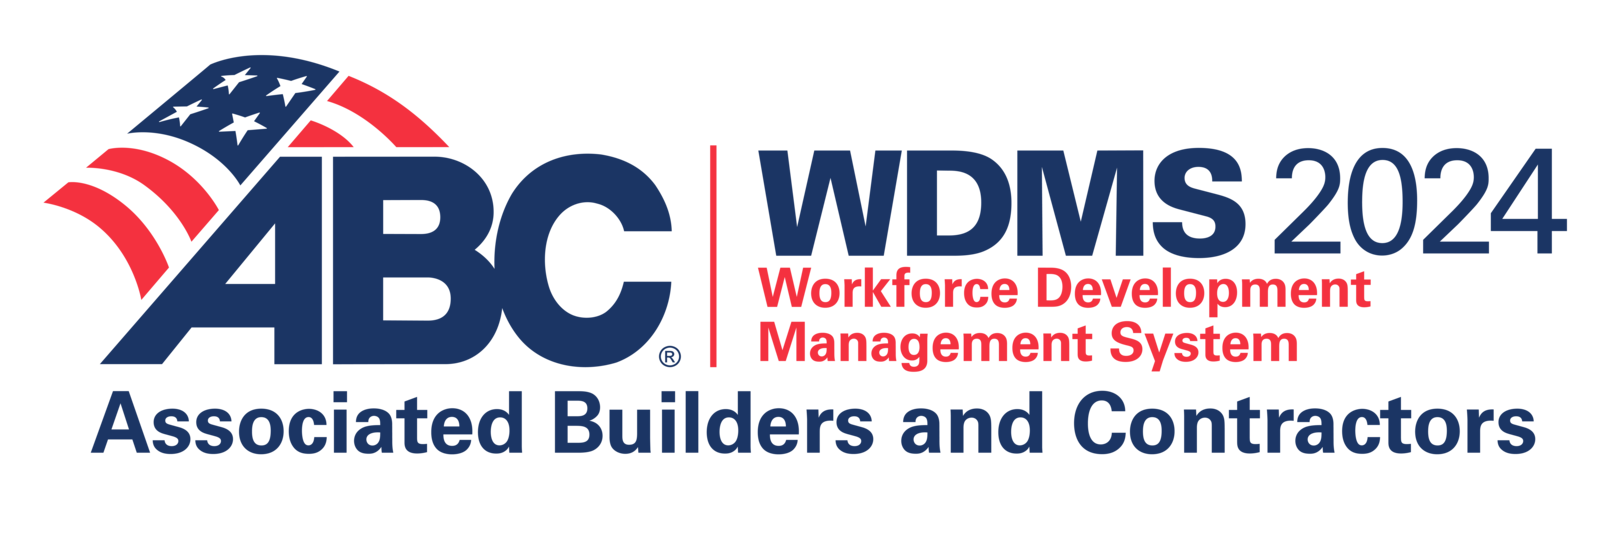 Associated Builders and Contractors WDMS 2024 logo badge